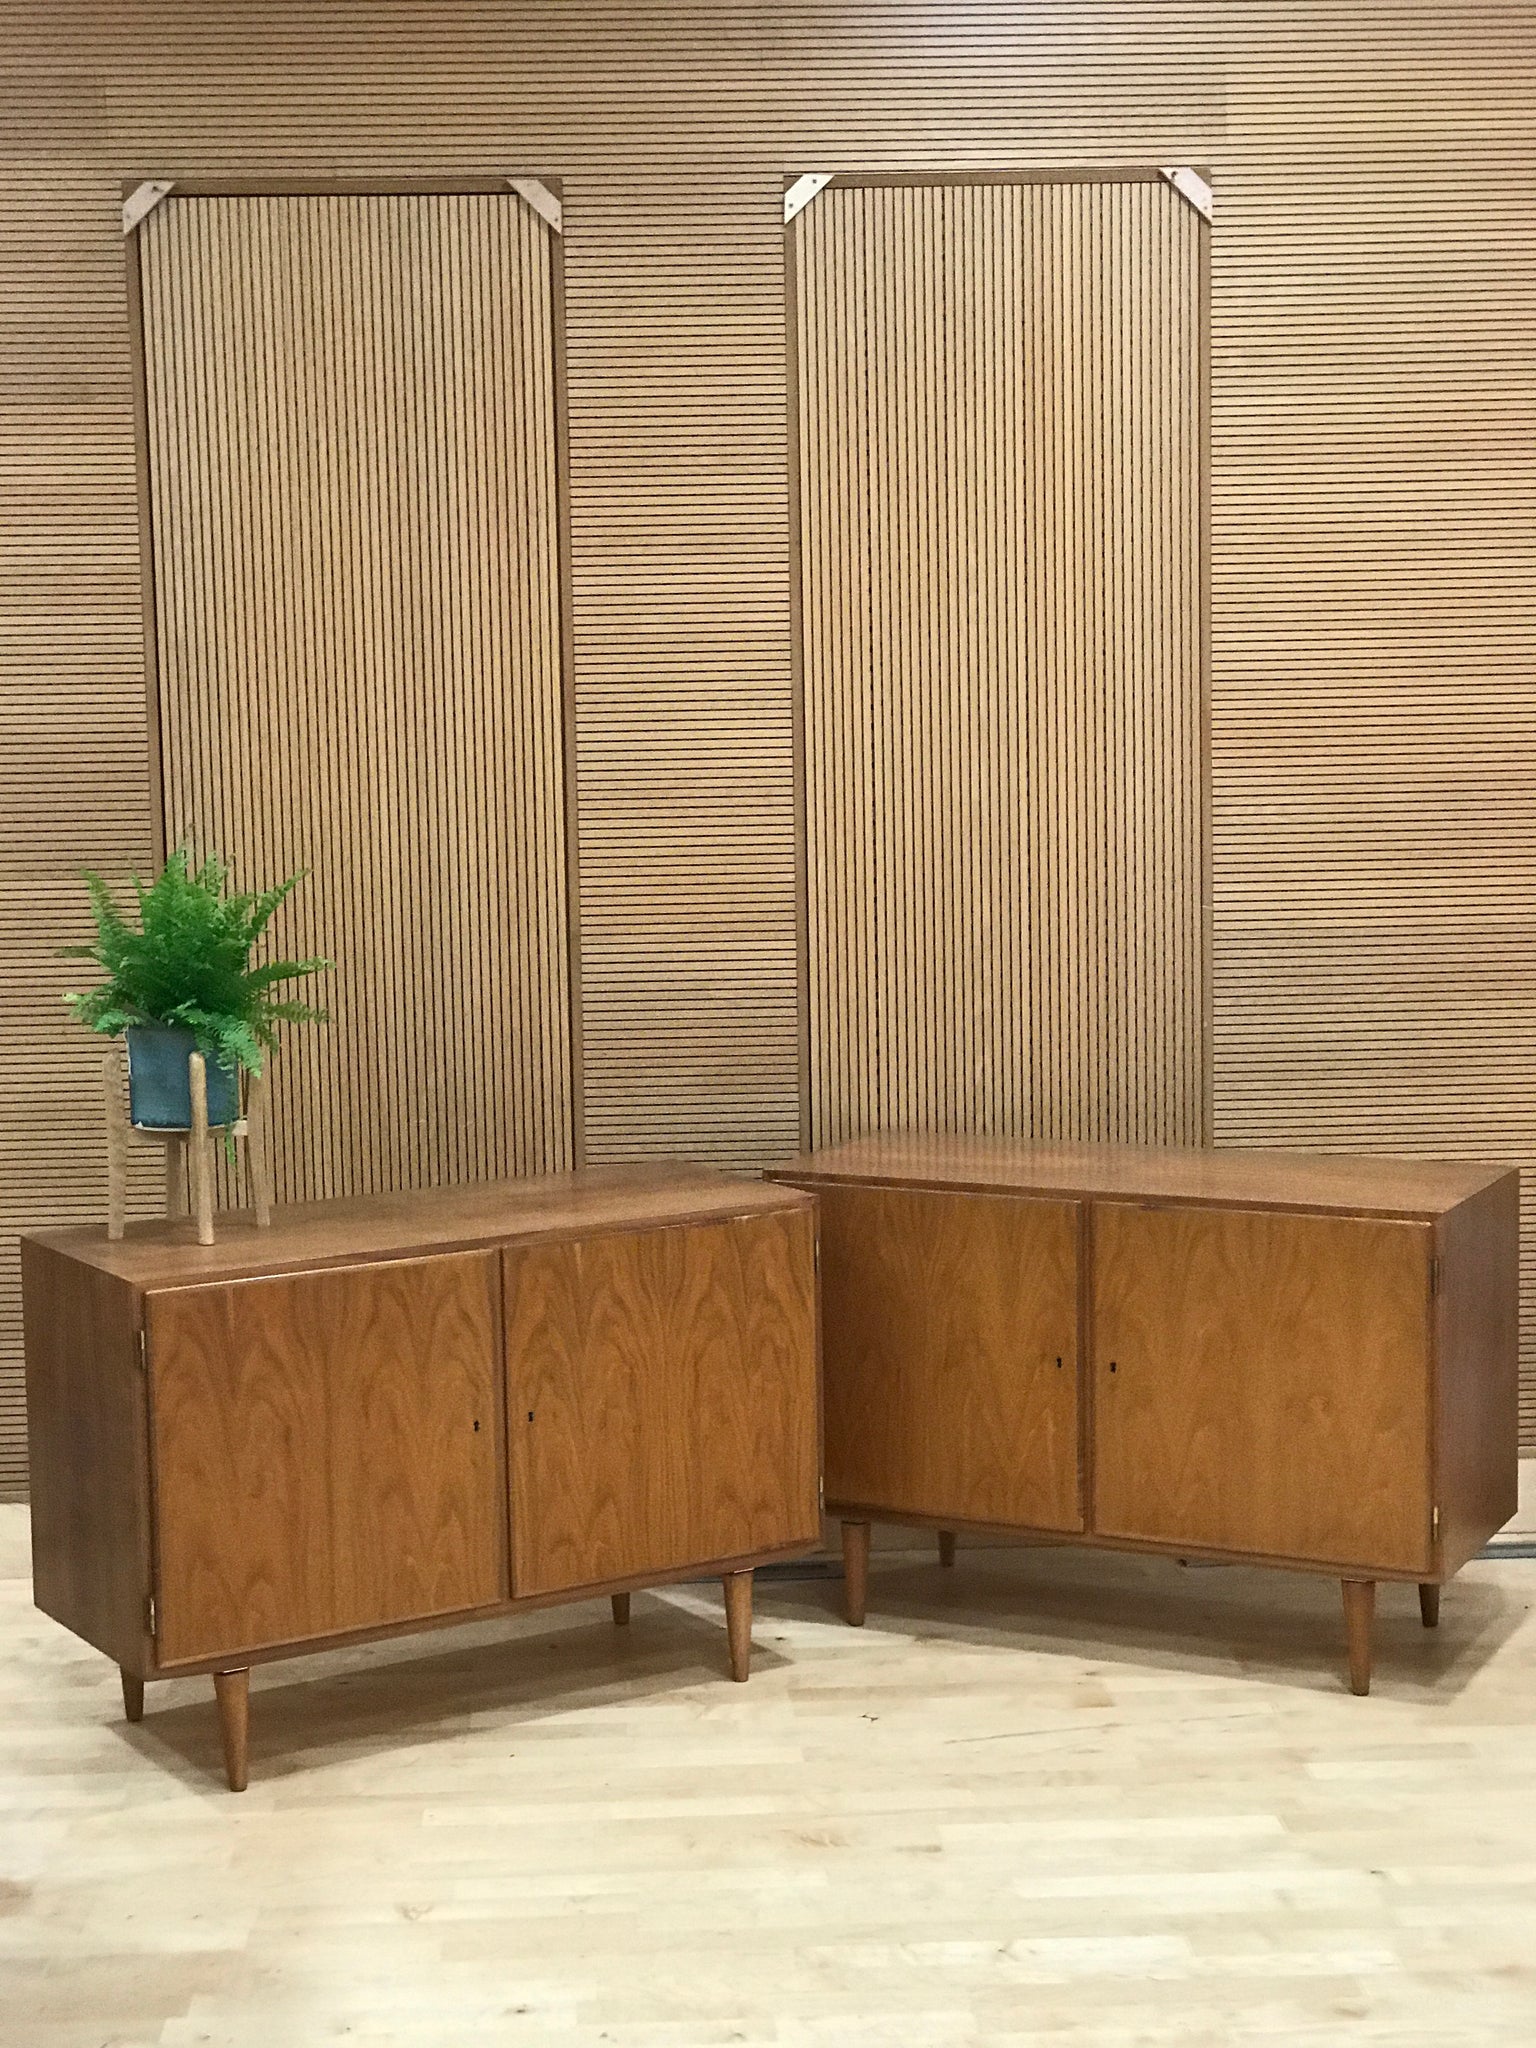 Carlo Jensen for Hundevad & Co, small Danish mid-century cabinets